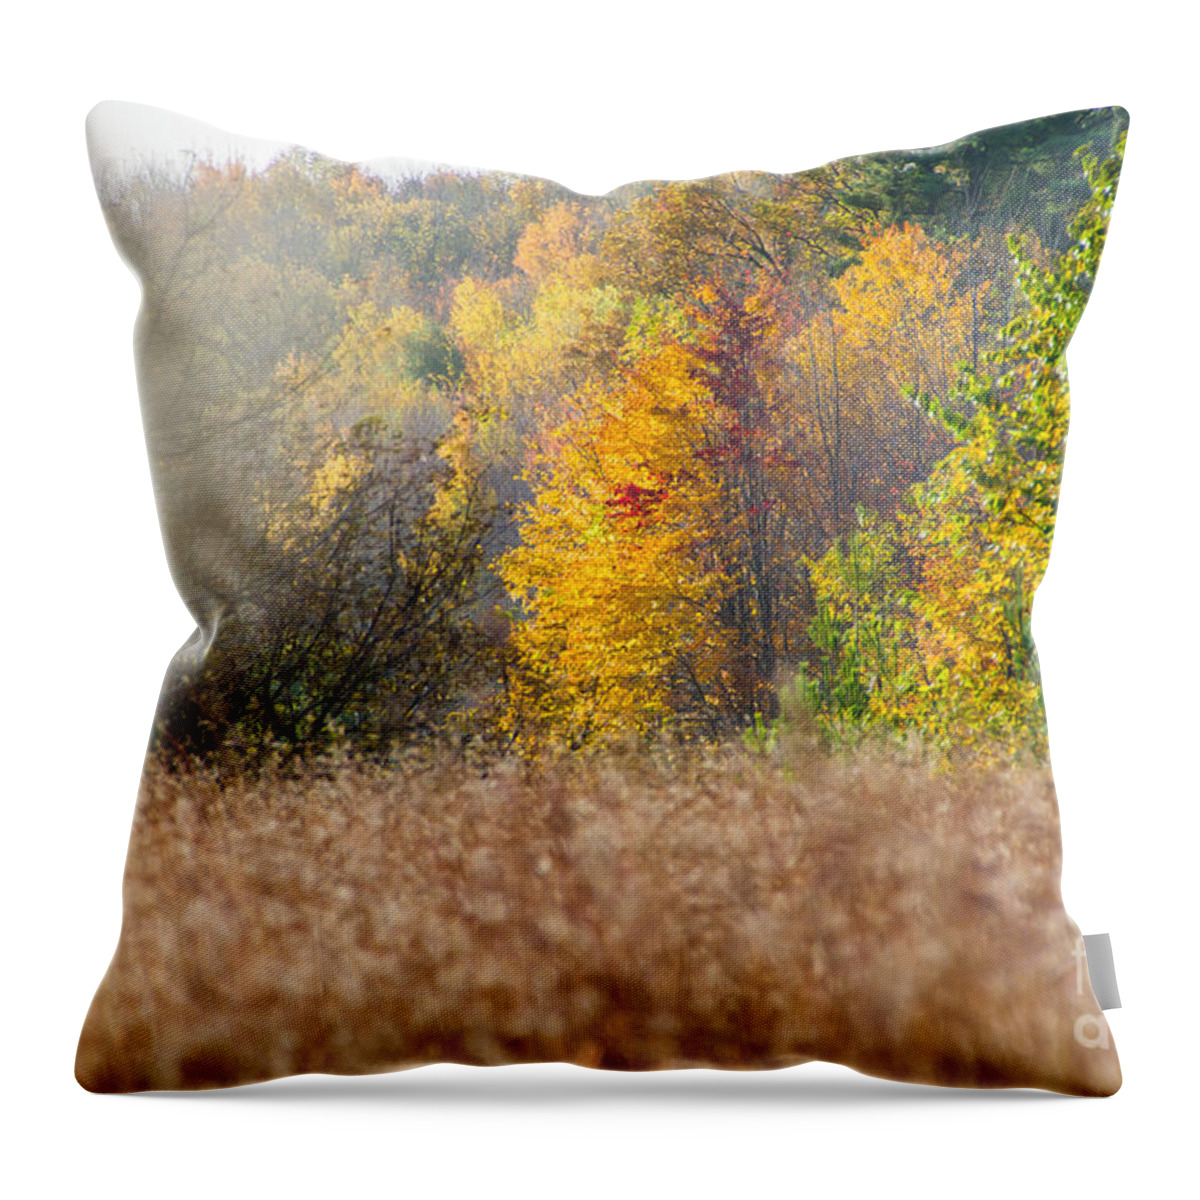 Autumn Throw Pillow featuring the photograph Autumn Mist by CJ Benson